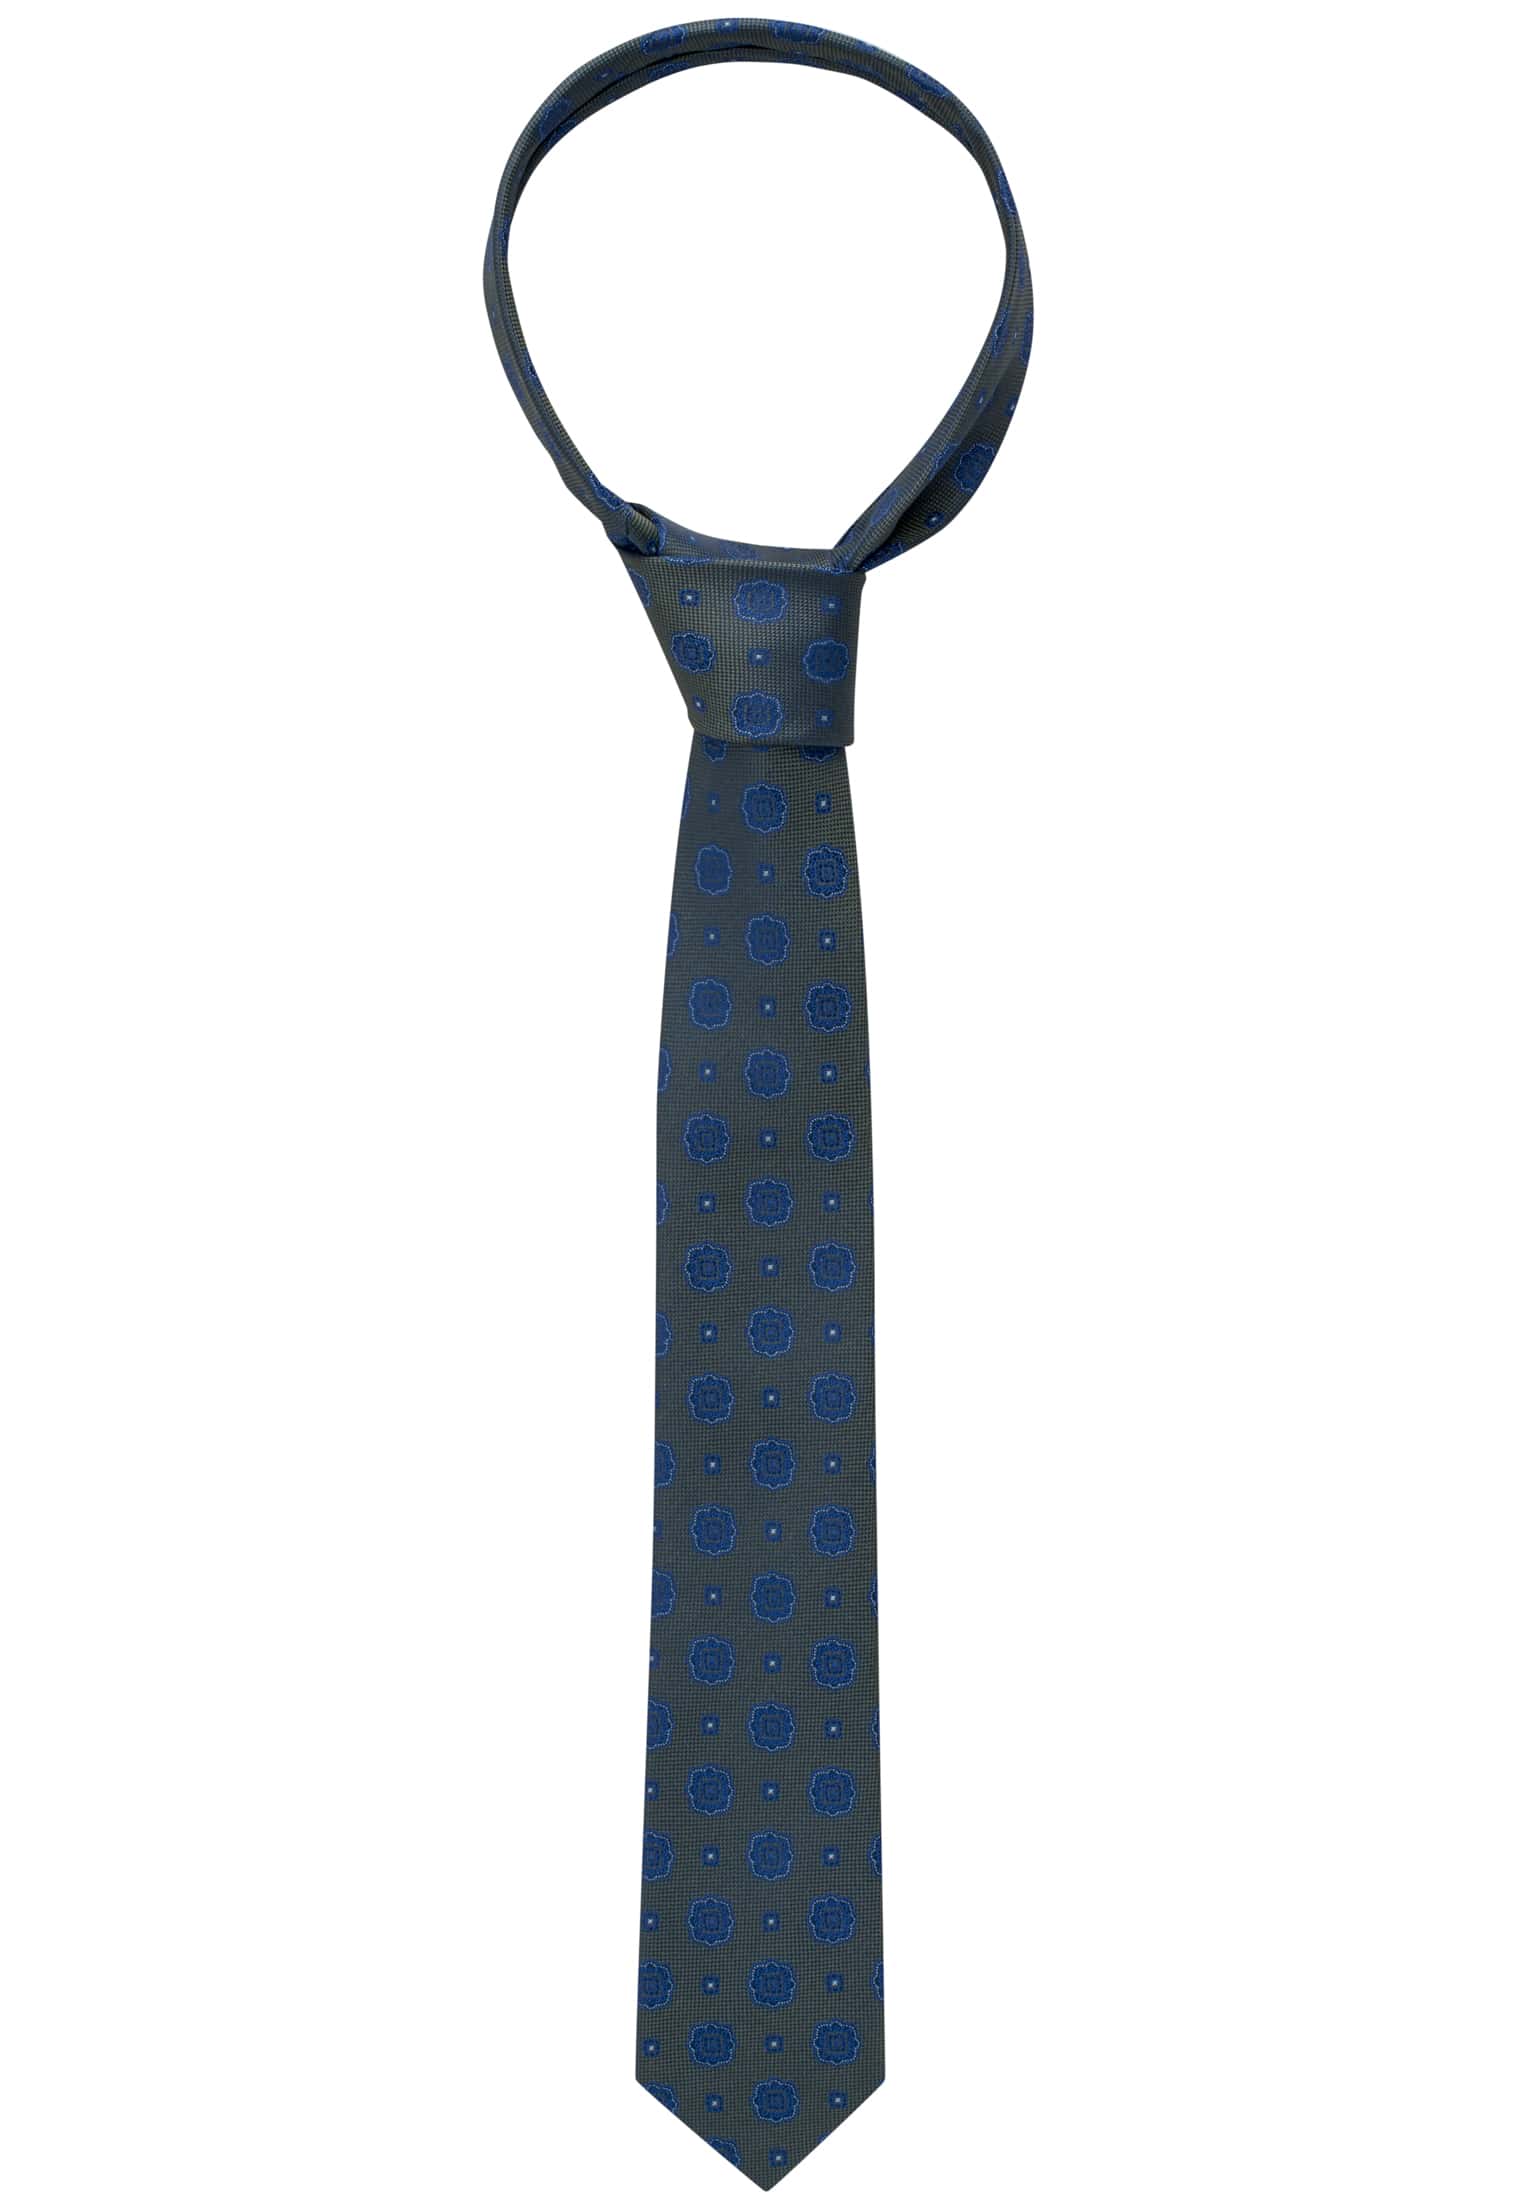 blau/grün | Krawatte in | 142 | blau/grün 1AC00183-81-48-142 gemustert